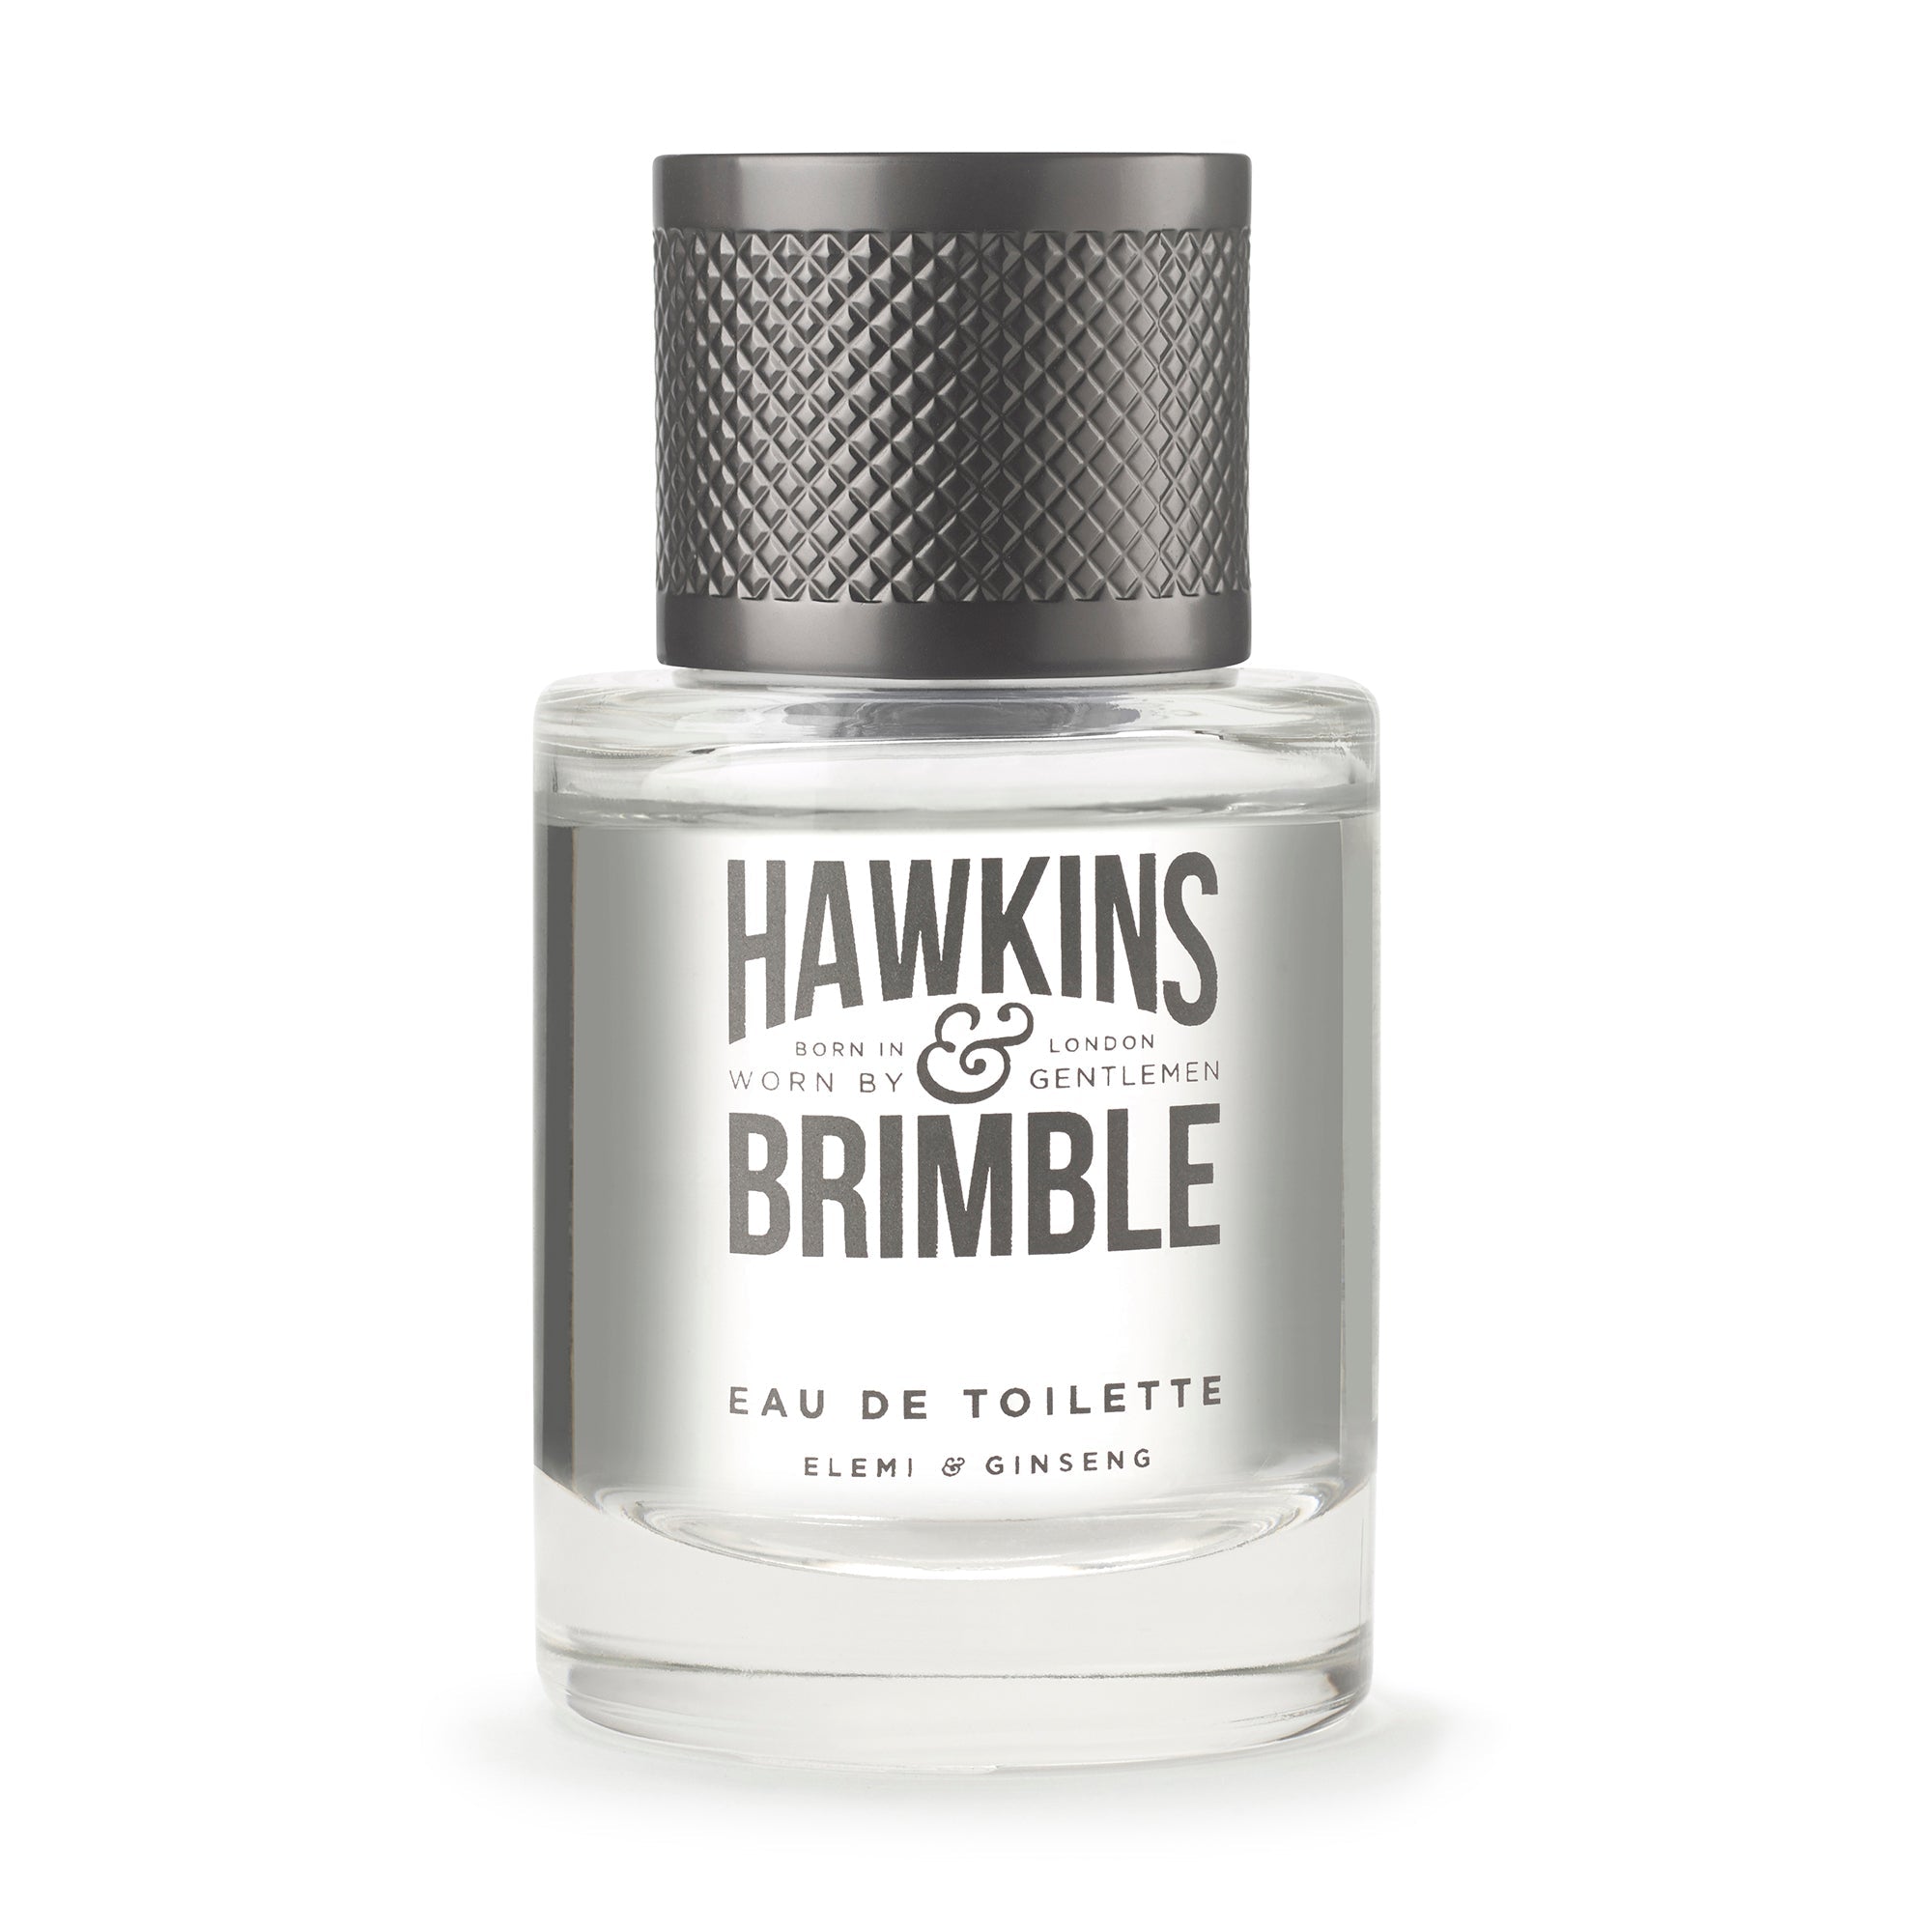 Peper Harow x Hawkins &amp; Brimble Fragrance Set